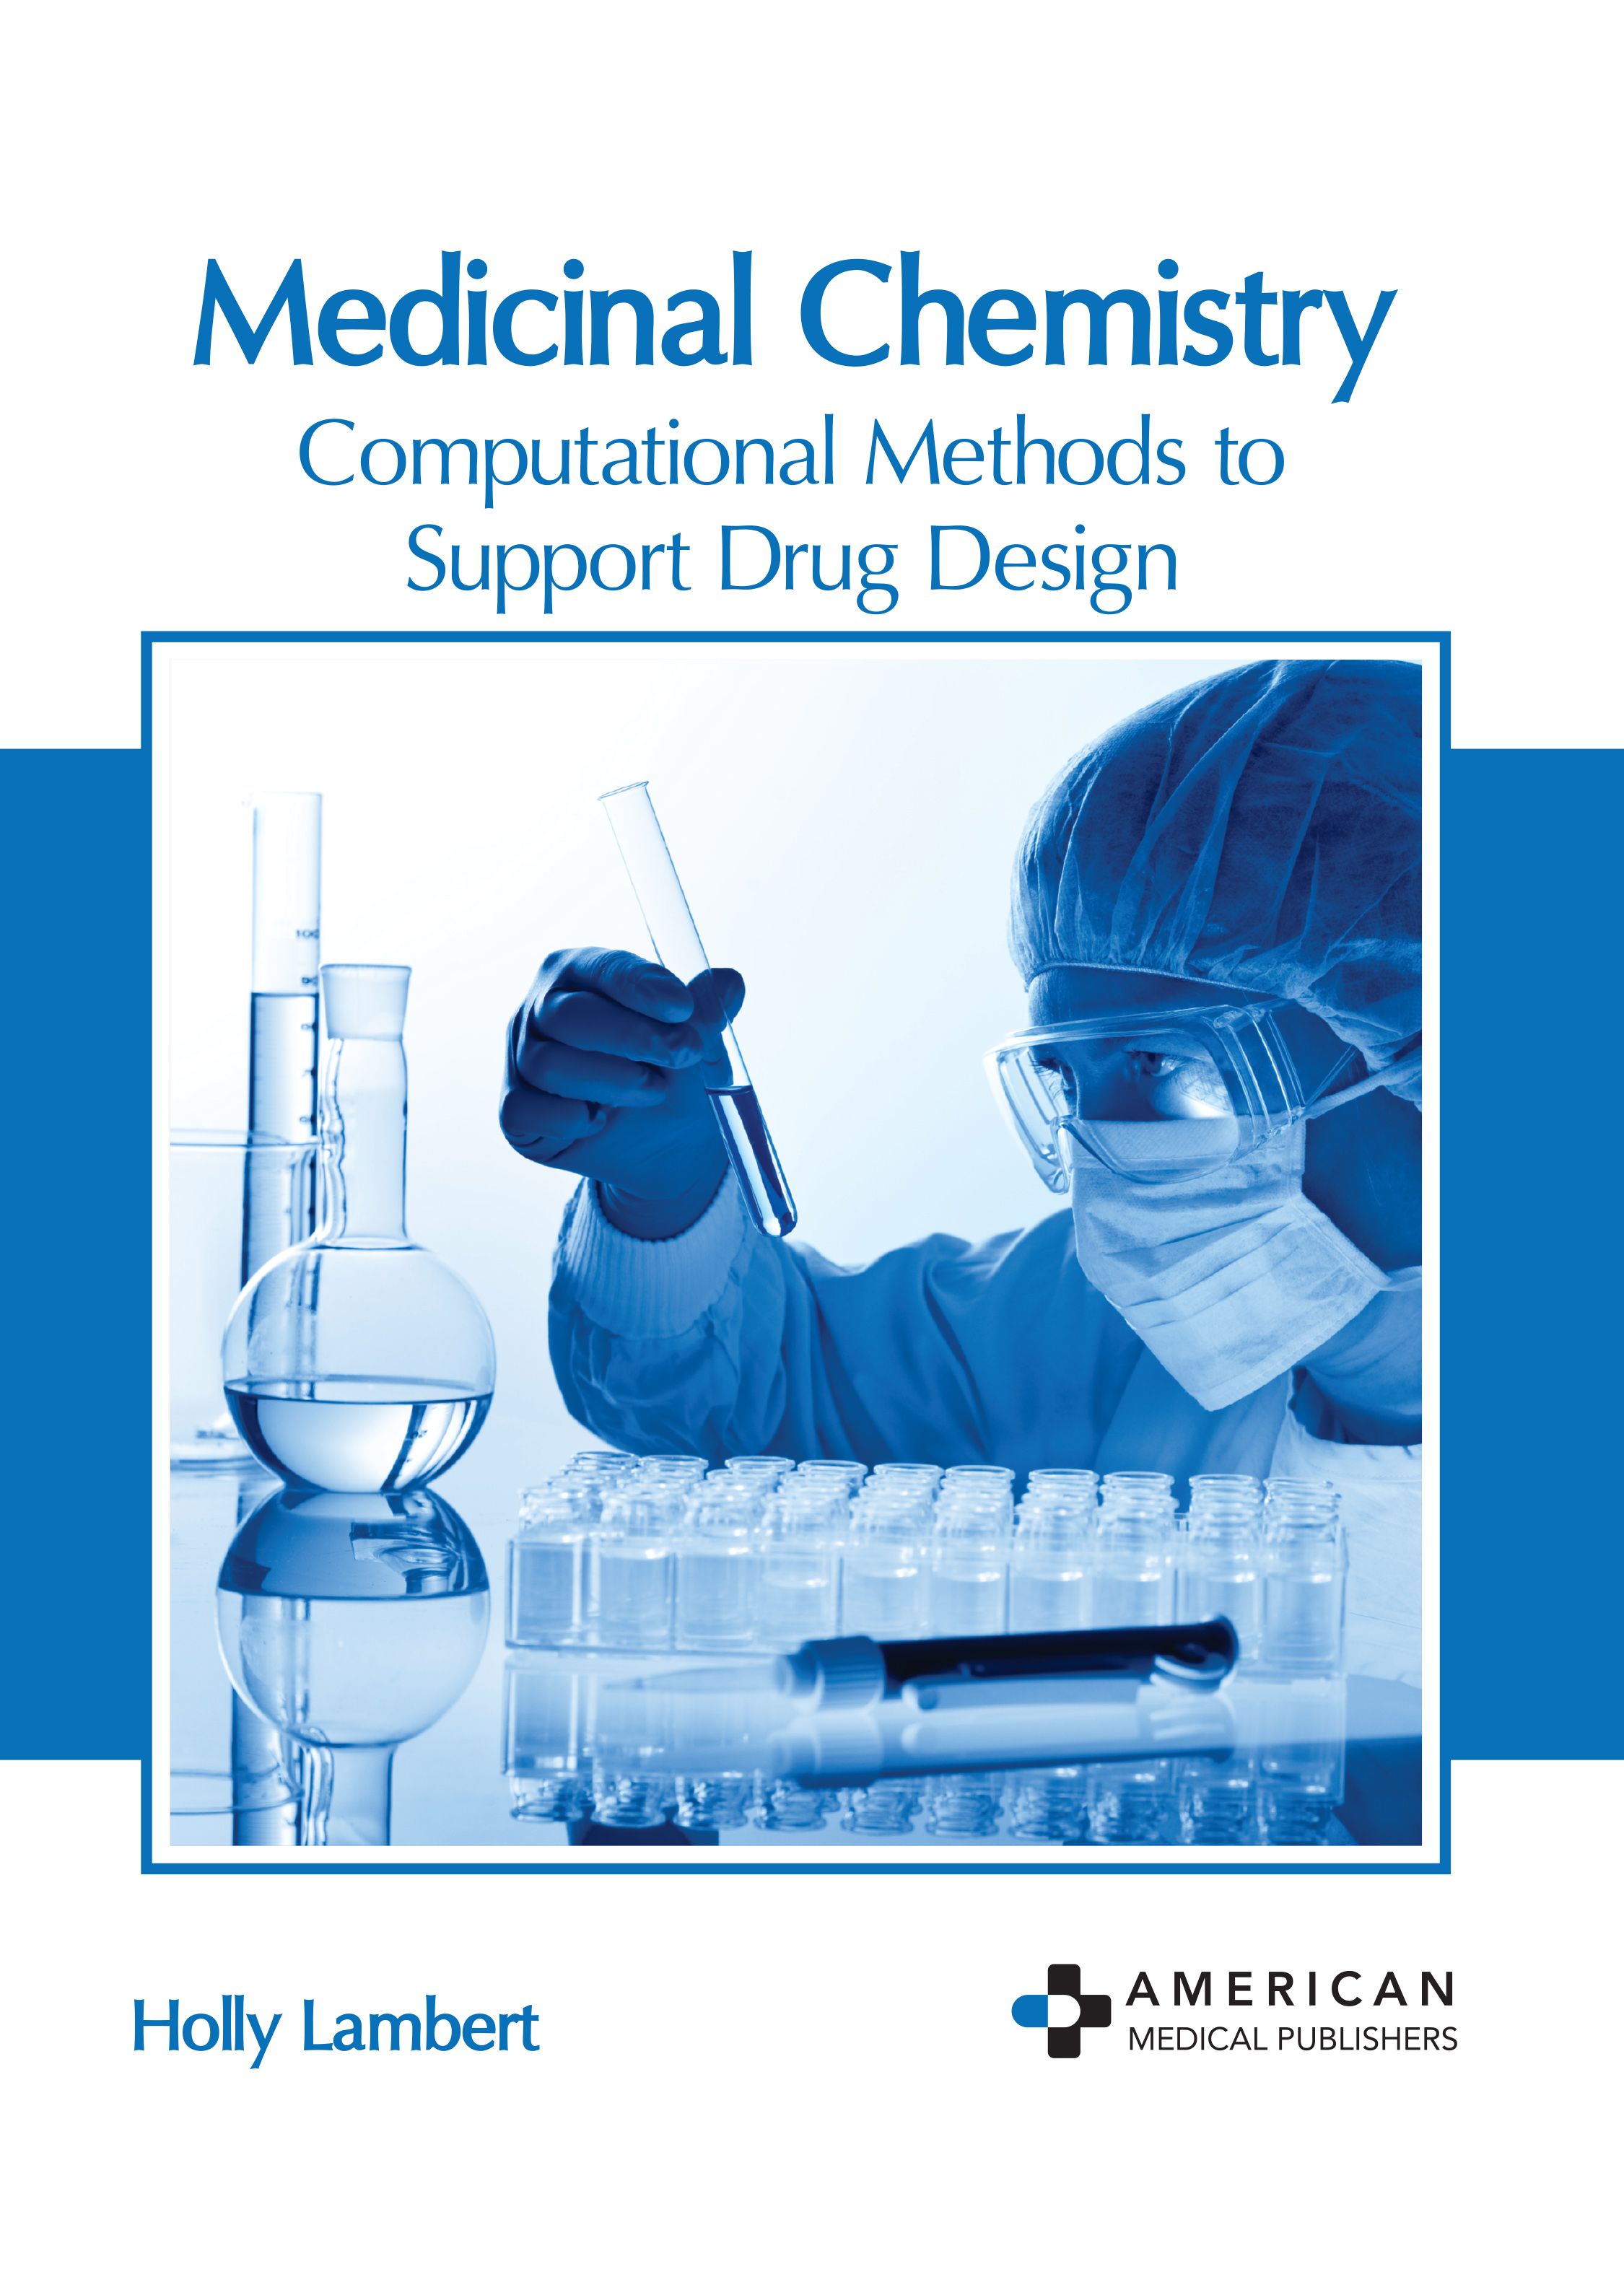 exclusive-publishers/american-medical-publishers/medicinal-chemistry-computational-methods-to-support-drug-design-9798887402550